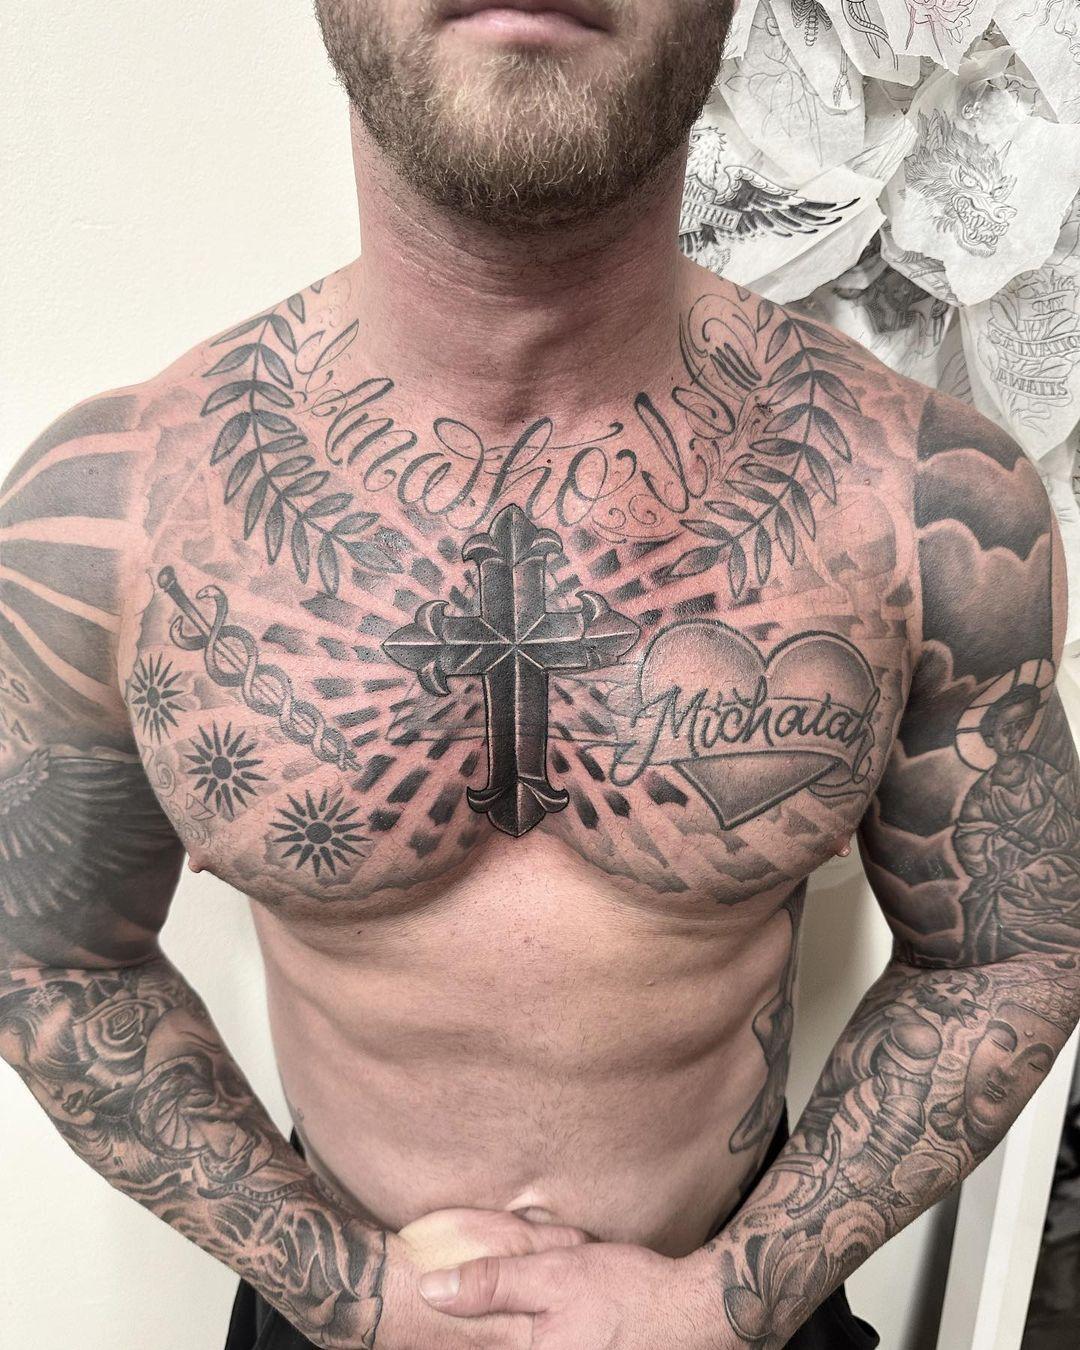 Chet Hanks flaunts new religious cross tattoo